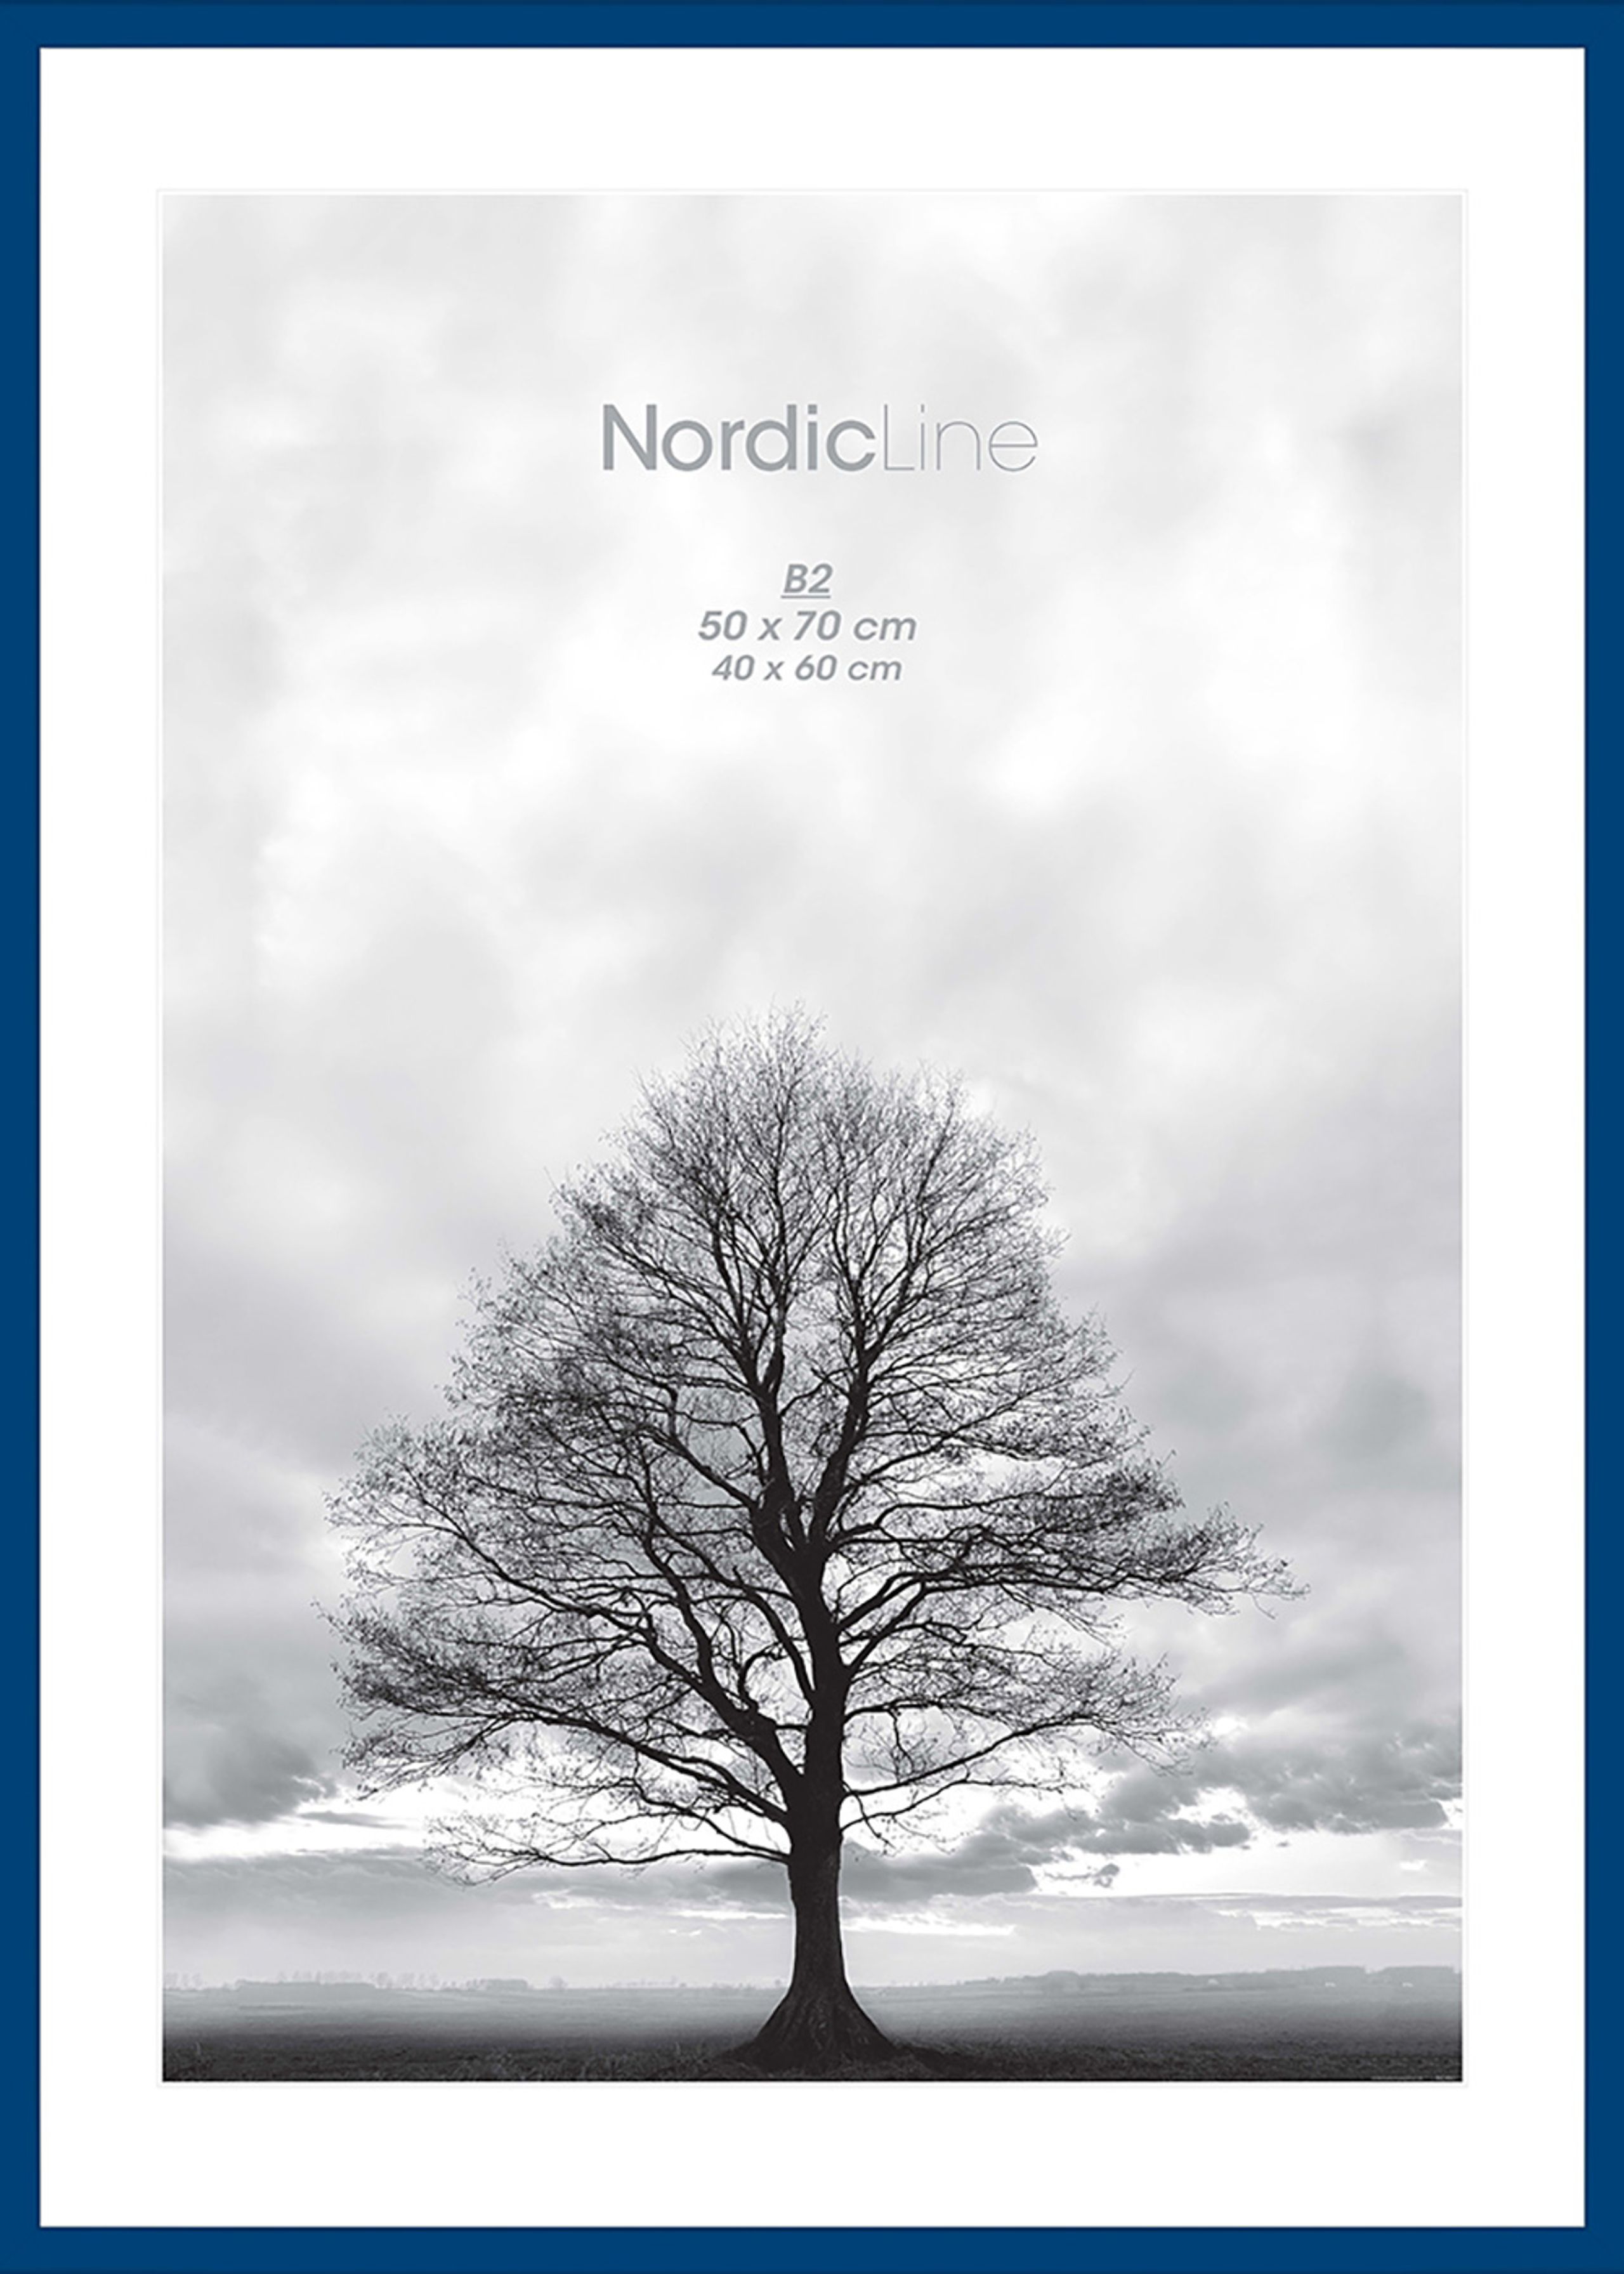 Nordic Line - Frames - Nordic Line frames - Classic Blue - Classic Blue